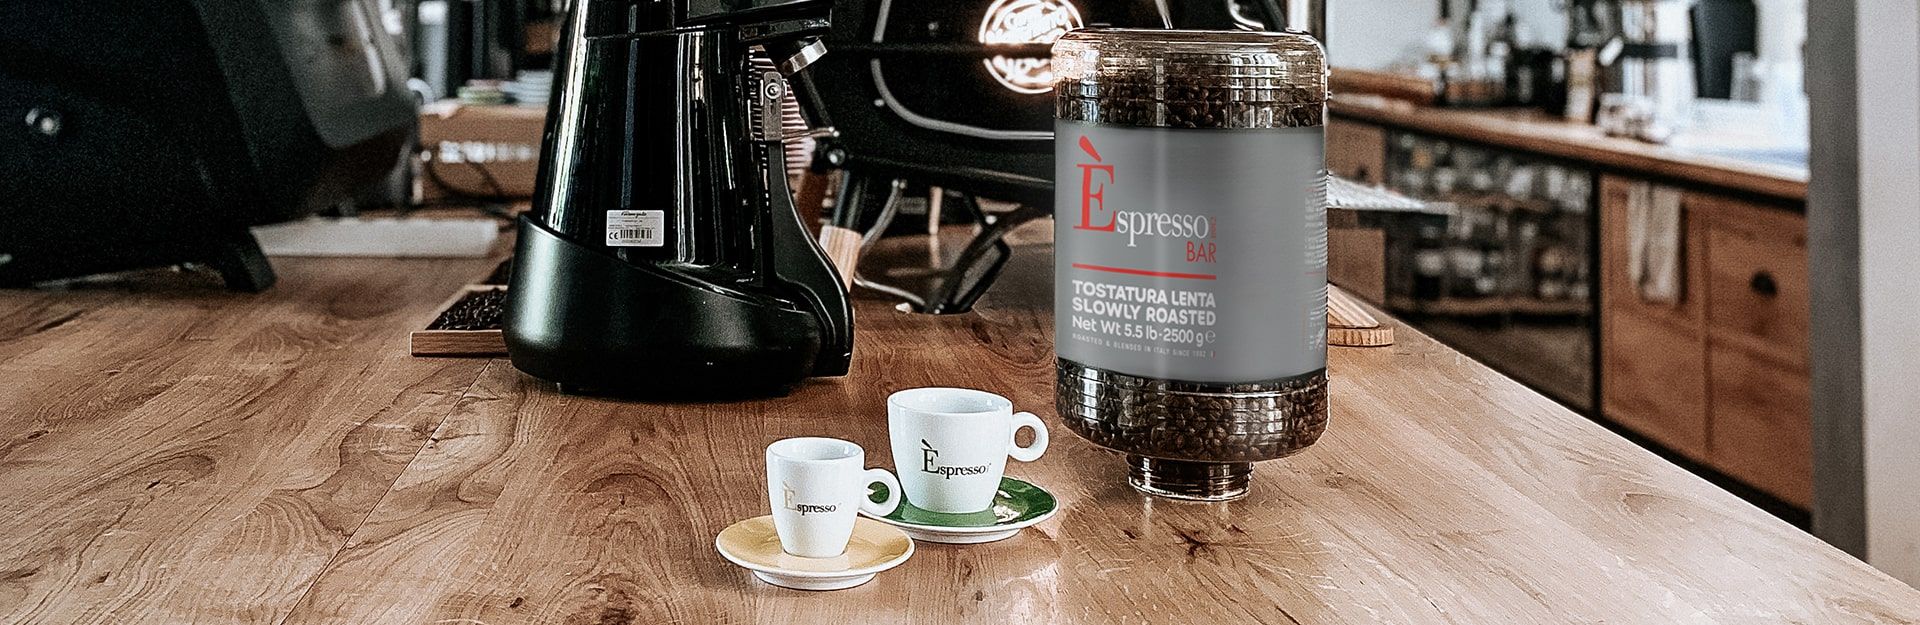 espresso1882 bar dsk